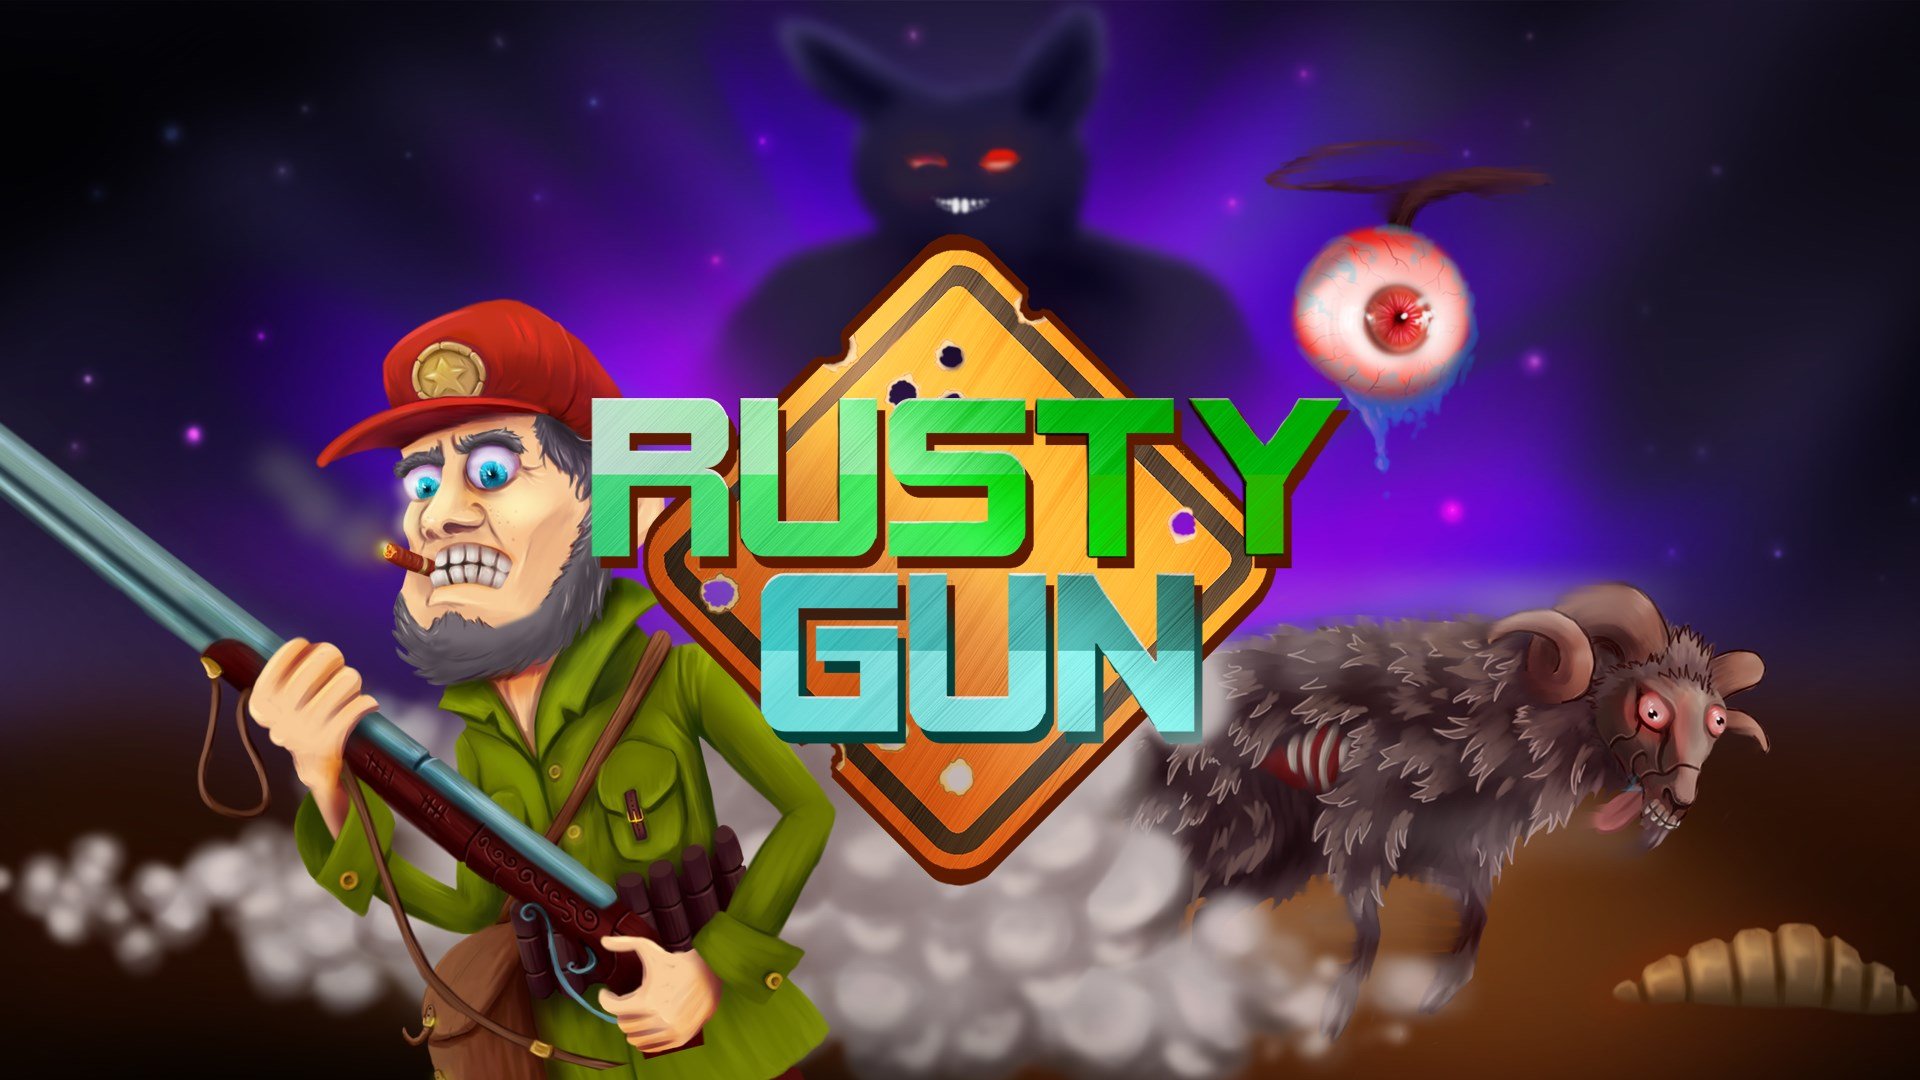 Rusty Gun cover image